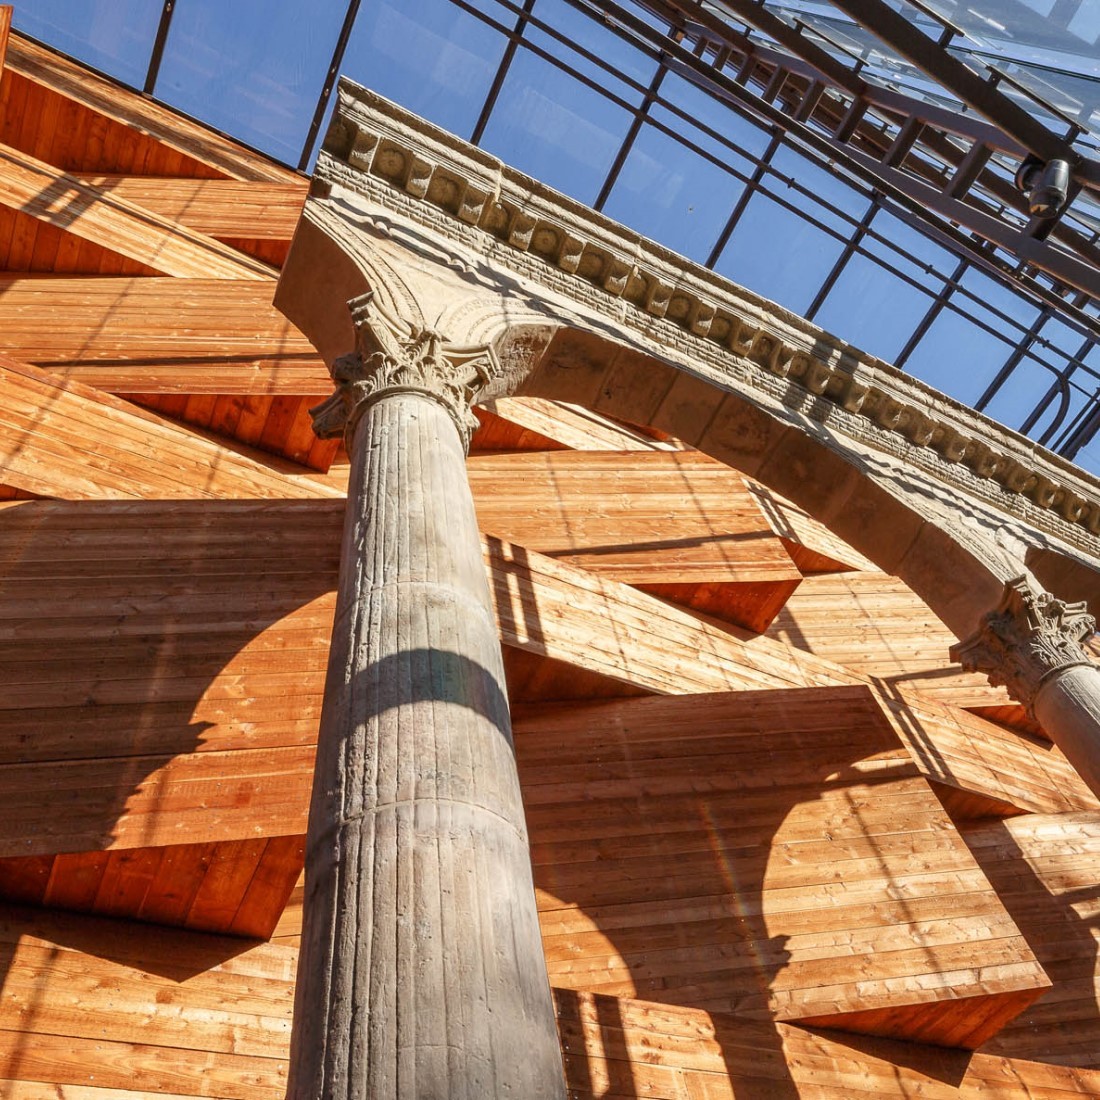 Blick an der Holzfassade des Museums entlang. Davor steht ein römischer Bogen. Foto: J. Vogel, LVR-LandesMuseum Bonn.